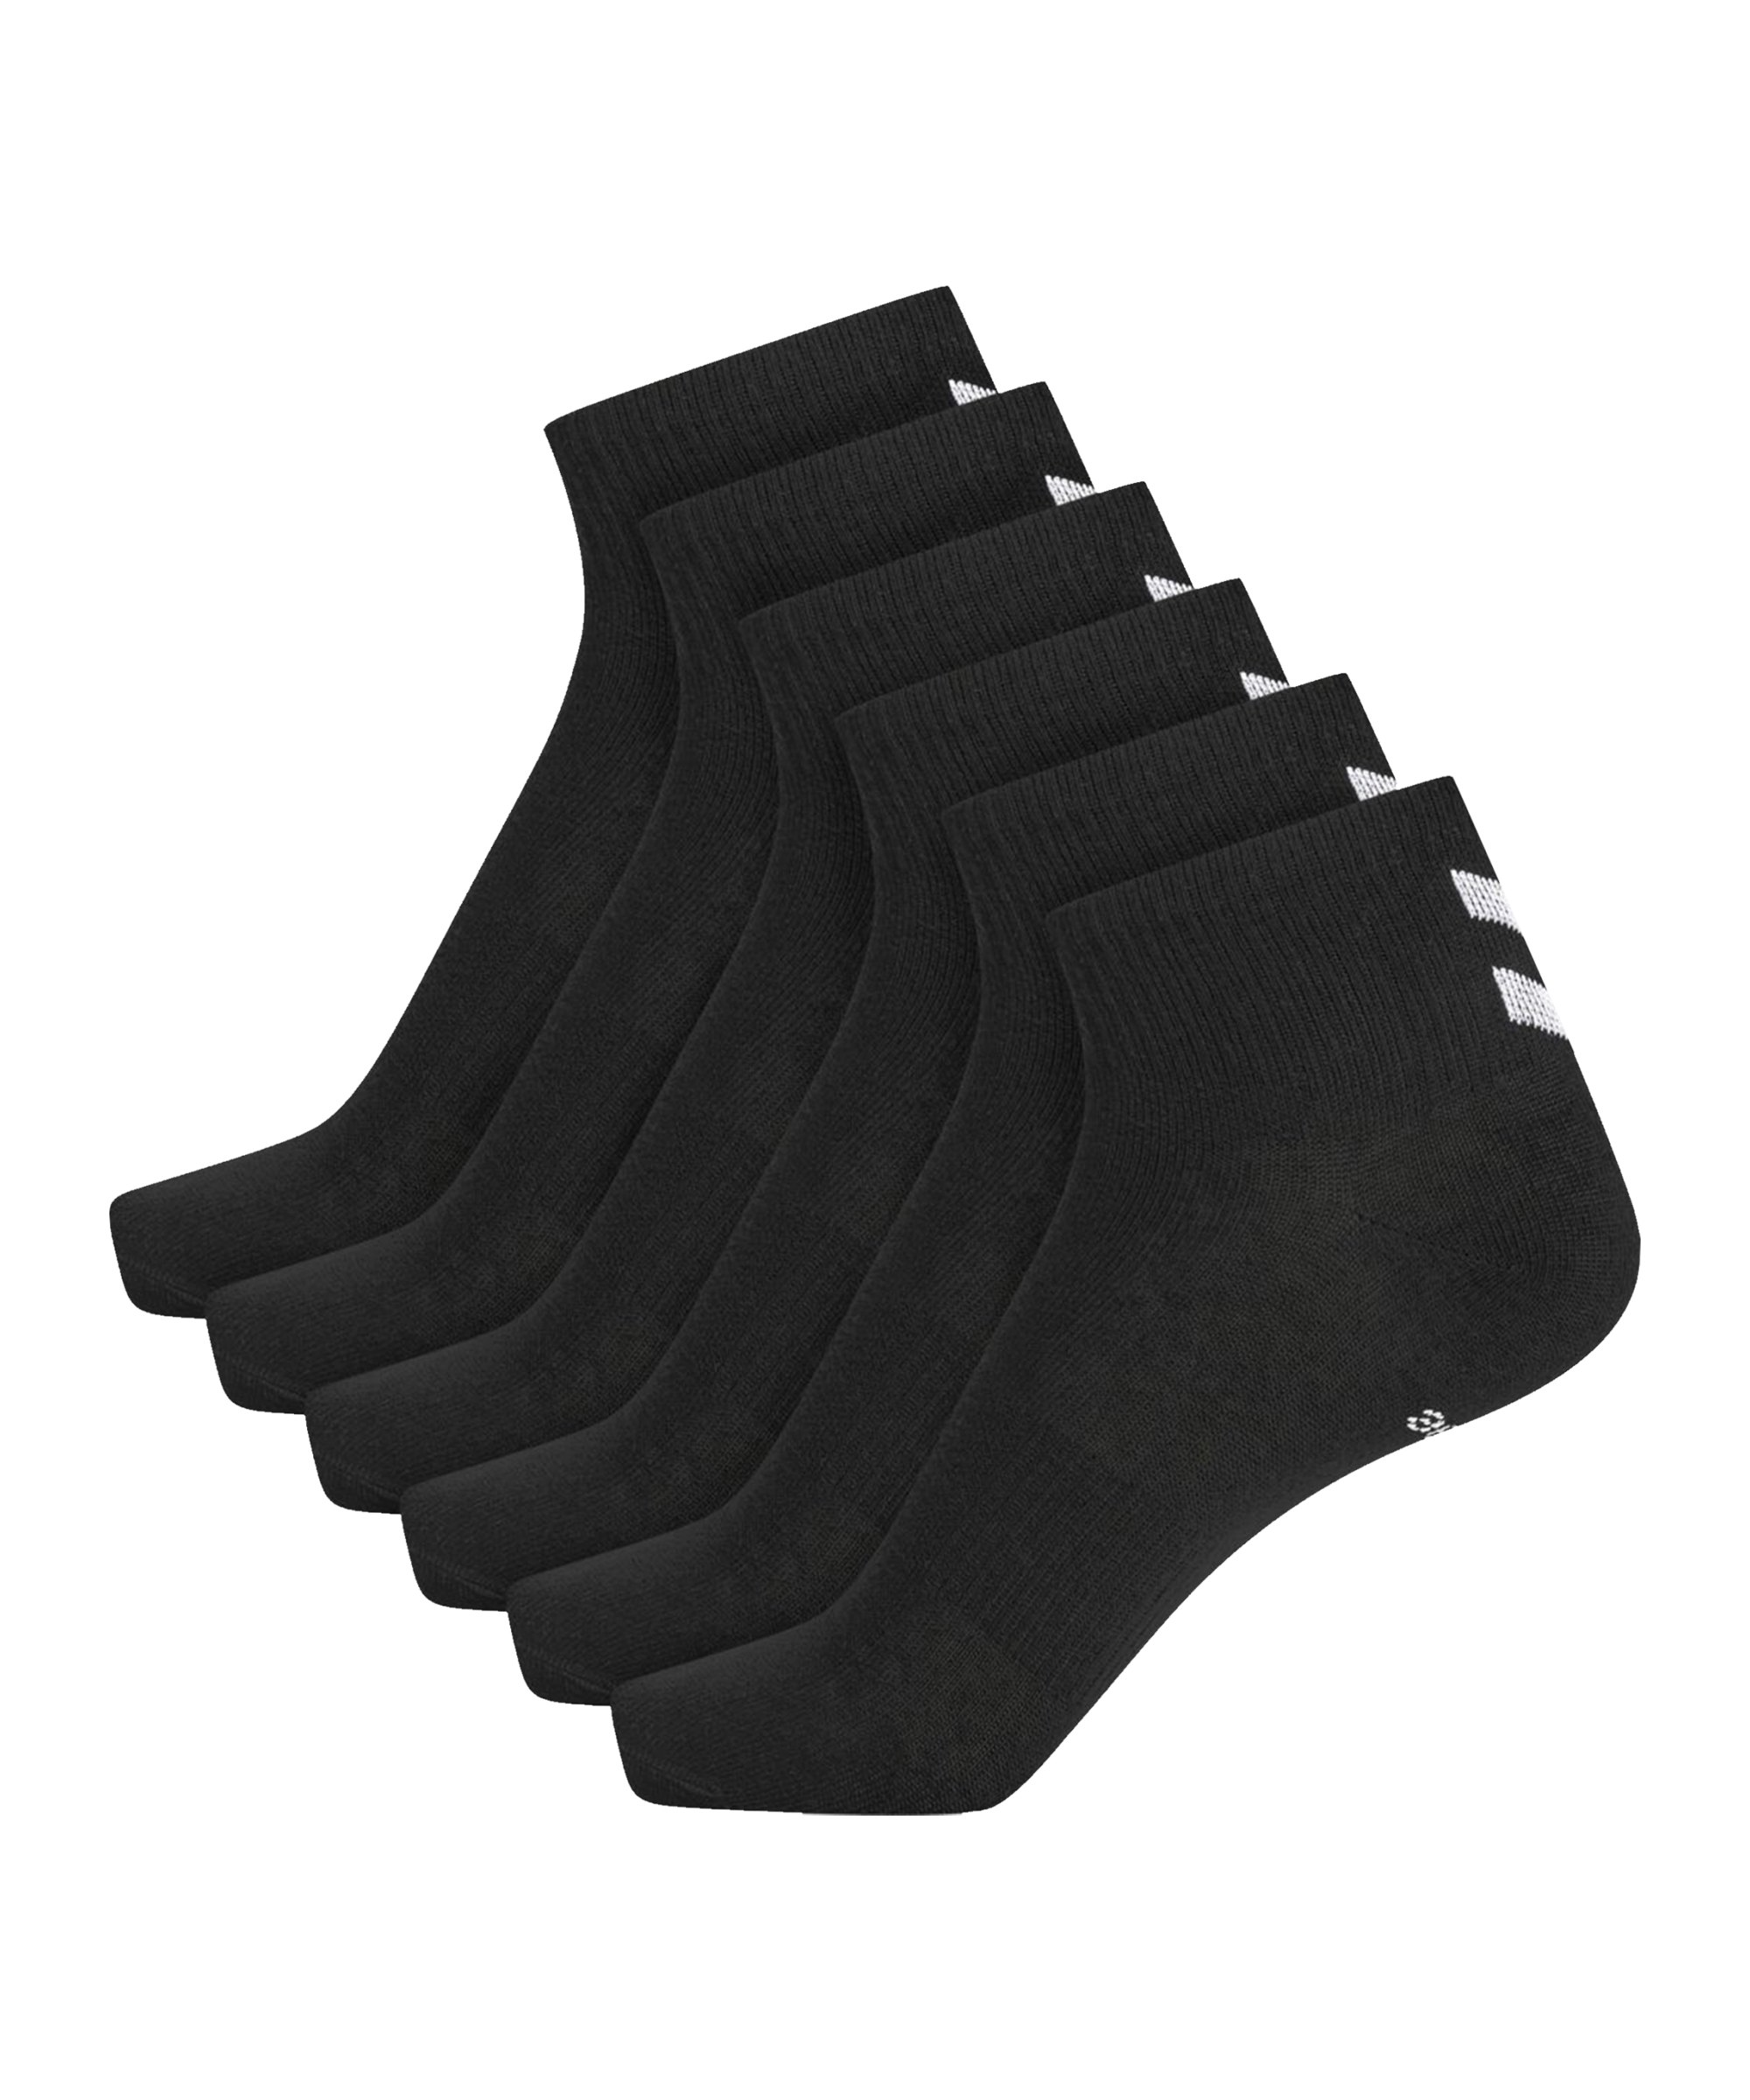 Hummel hmlchevron 6-Pack Mid Cut Socken F2001 - schwarz